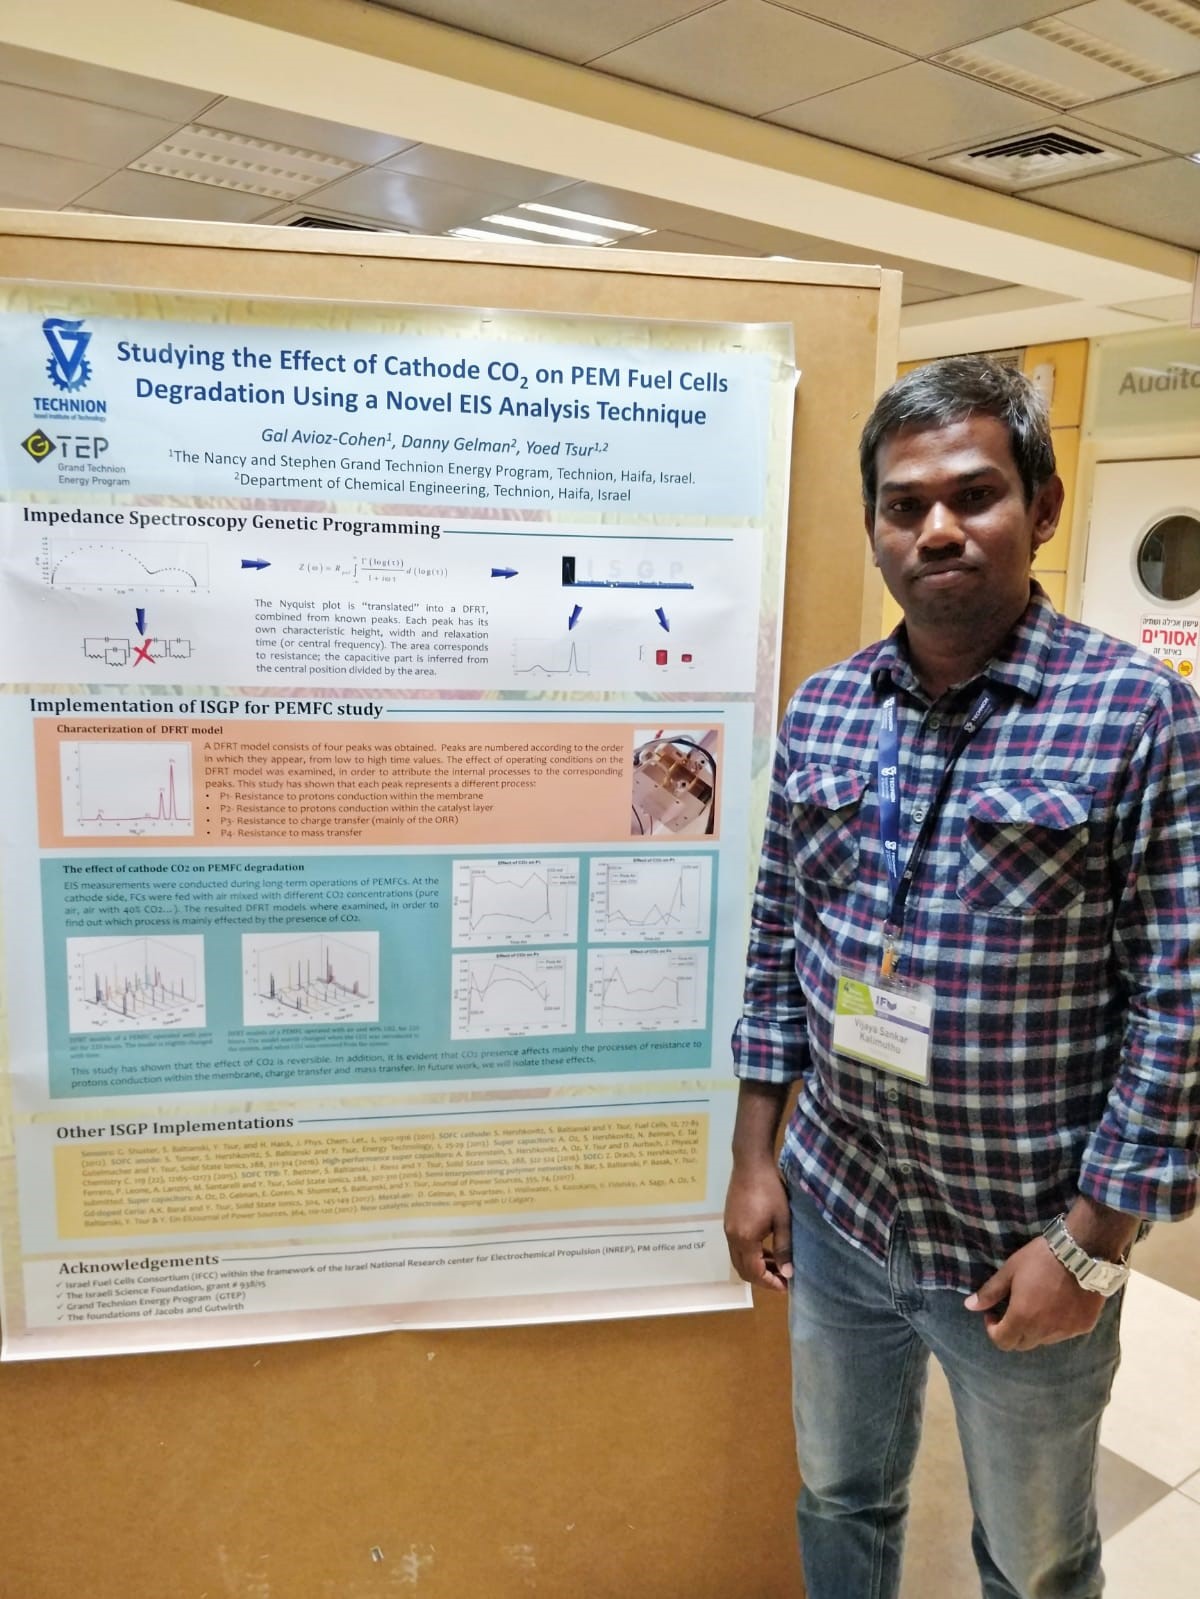 Vijaya presenting a poster at the 4th IFCC Workshop-2019